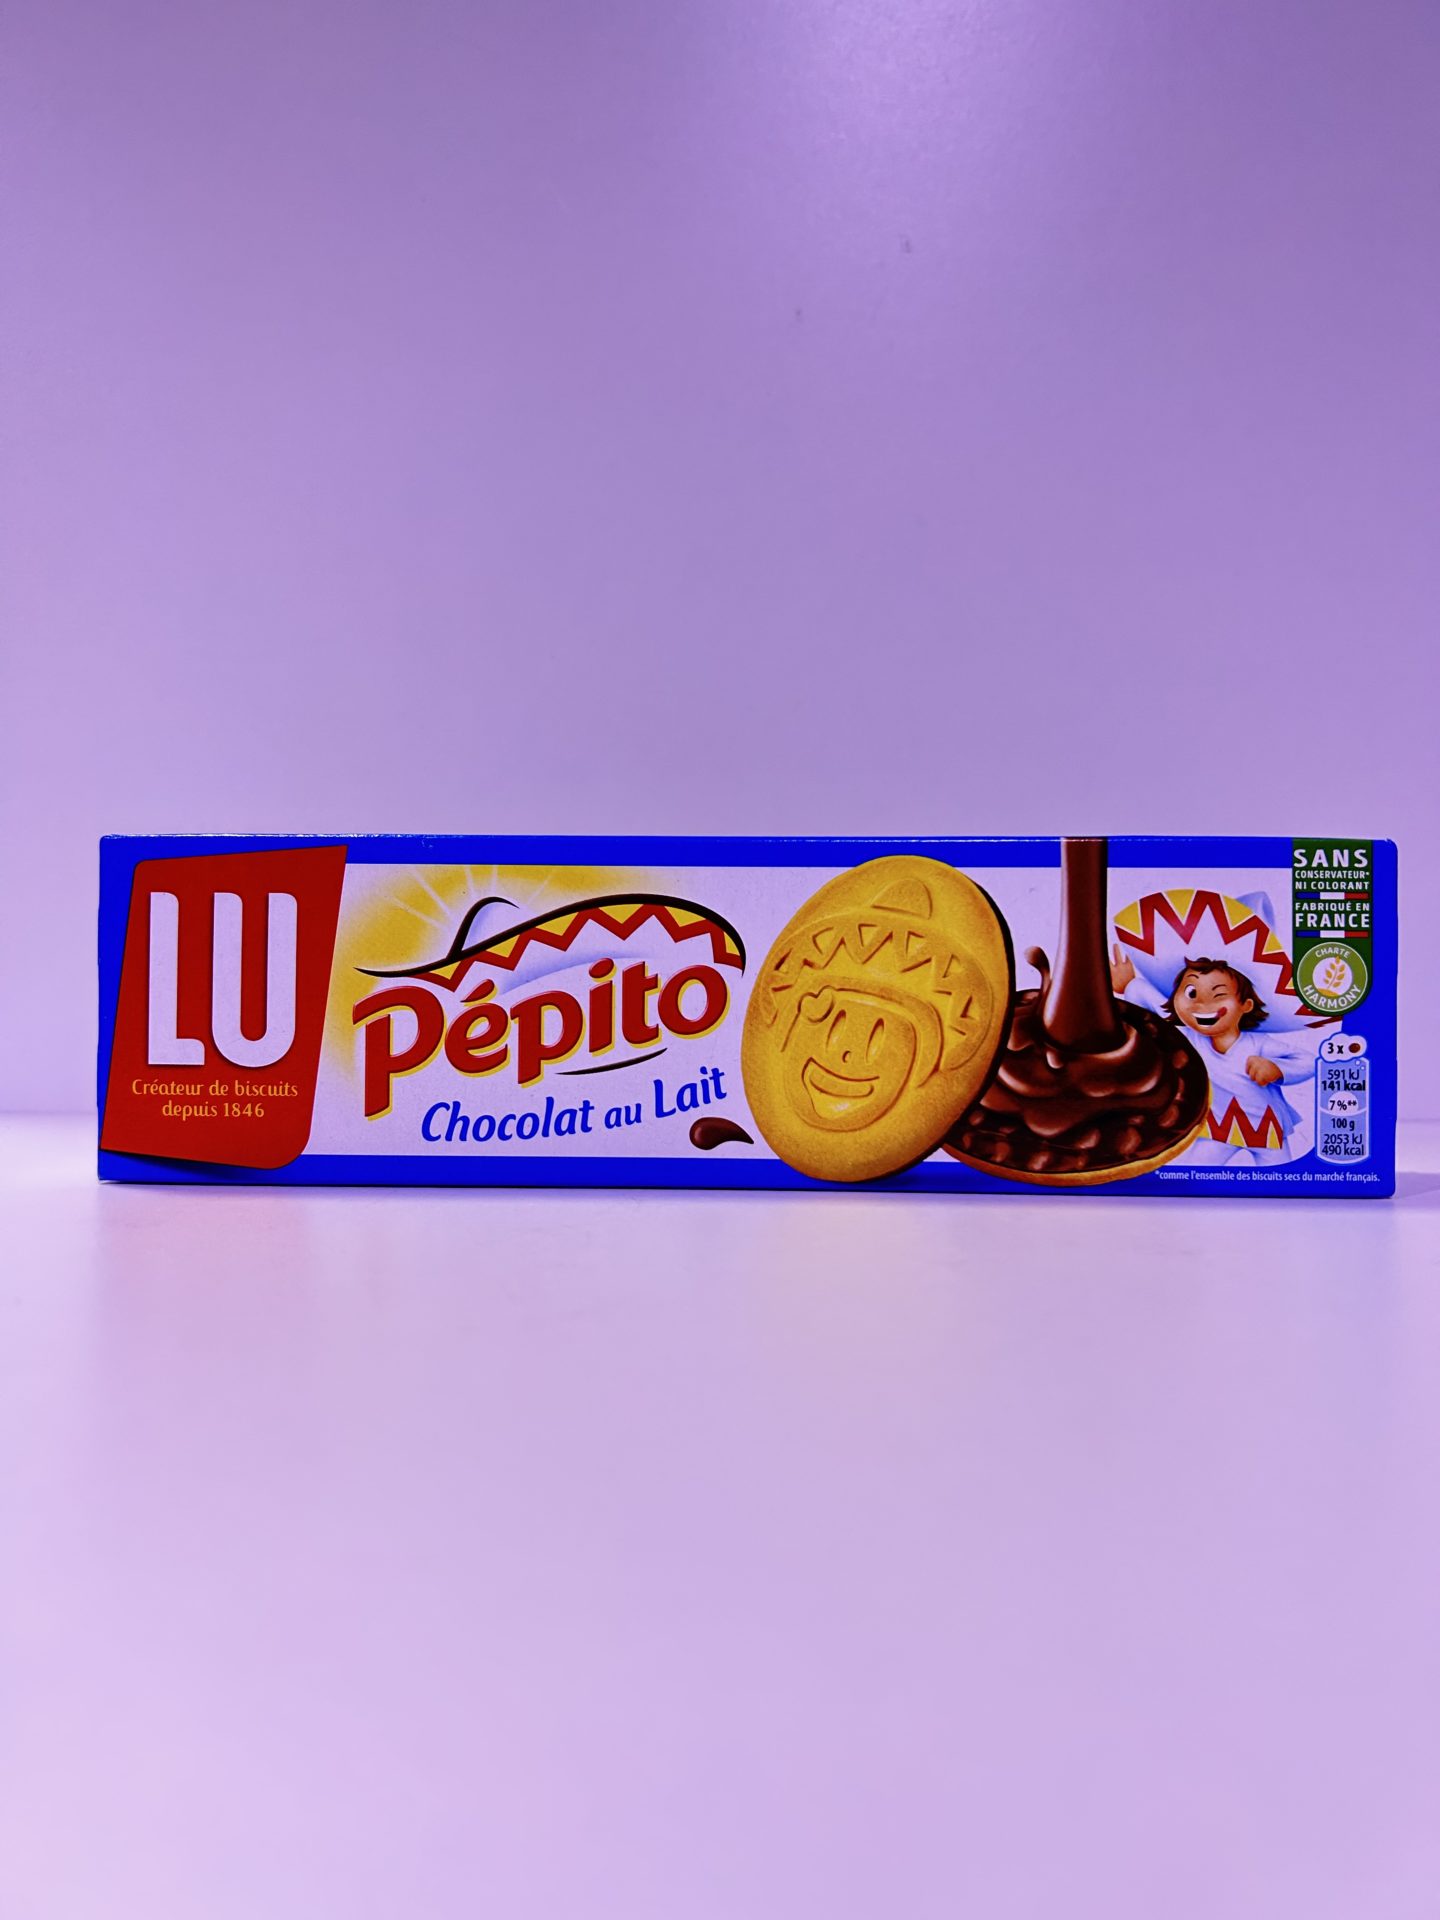 Biscuits Pépito Lu Chocolat Lait